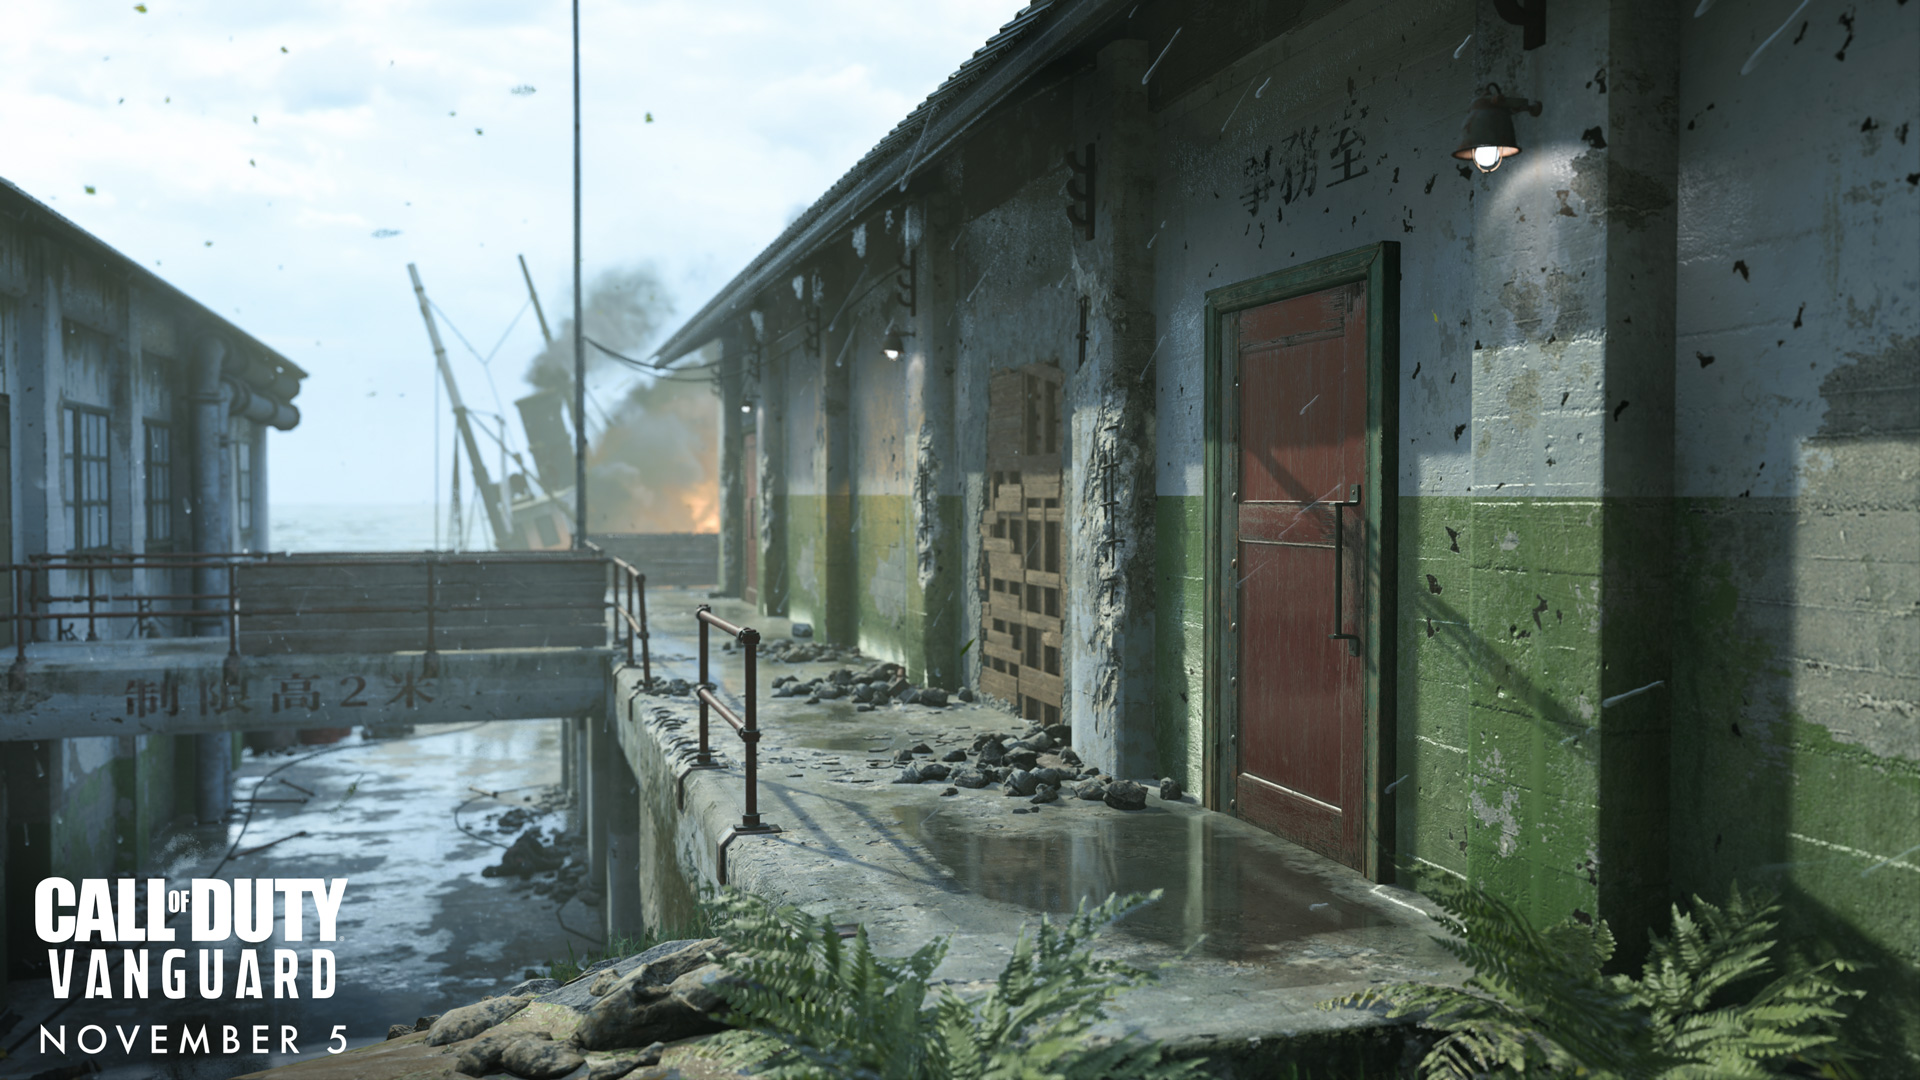 Call of Duty Vanguard traz COD de volta a Segunda Guerra baseado